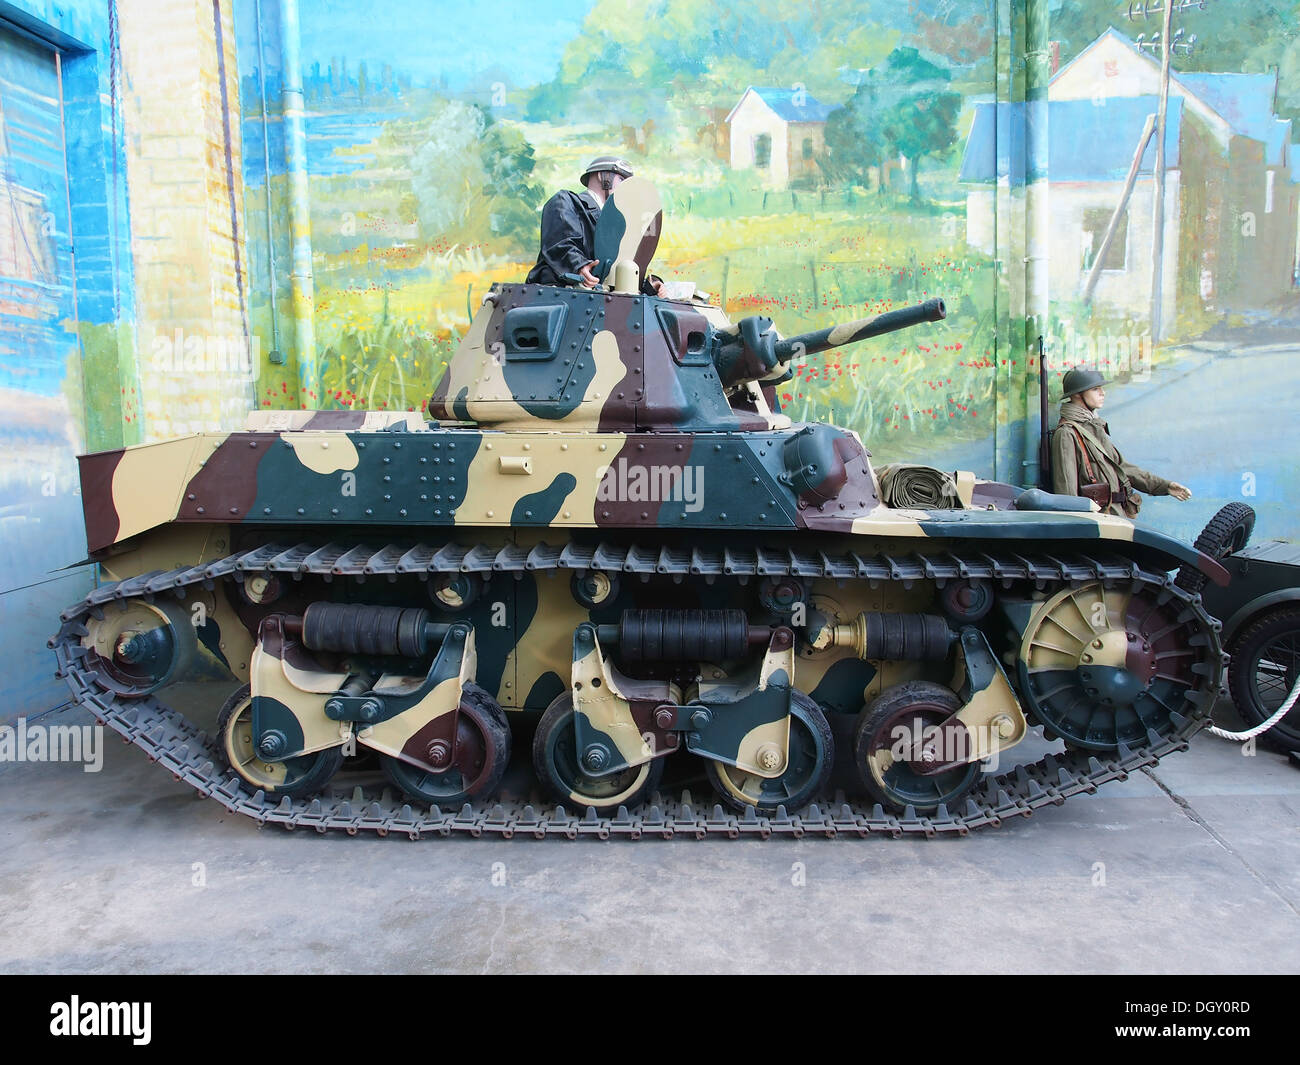 AMC 35, tank museum, Saumur, France, pic-3 Stock Photo